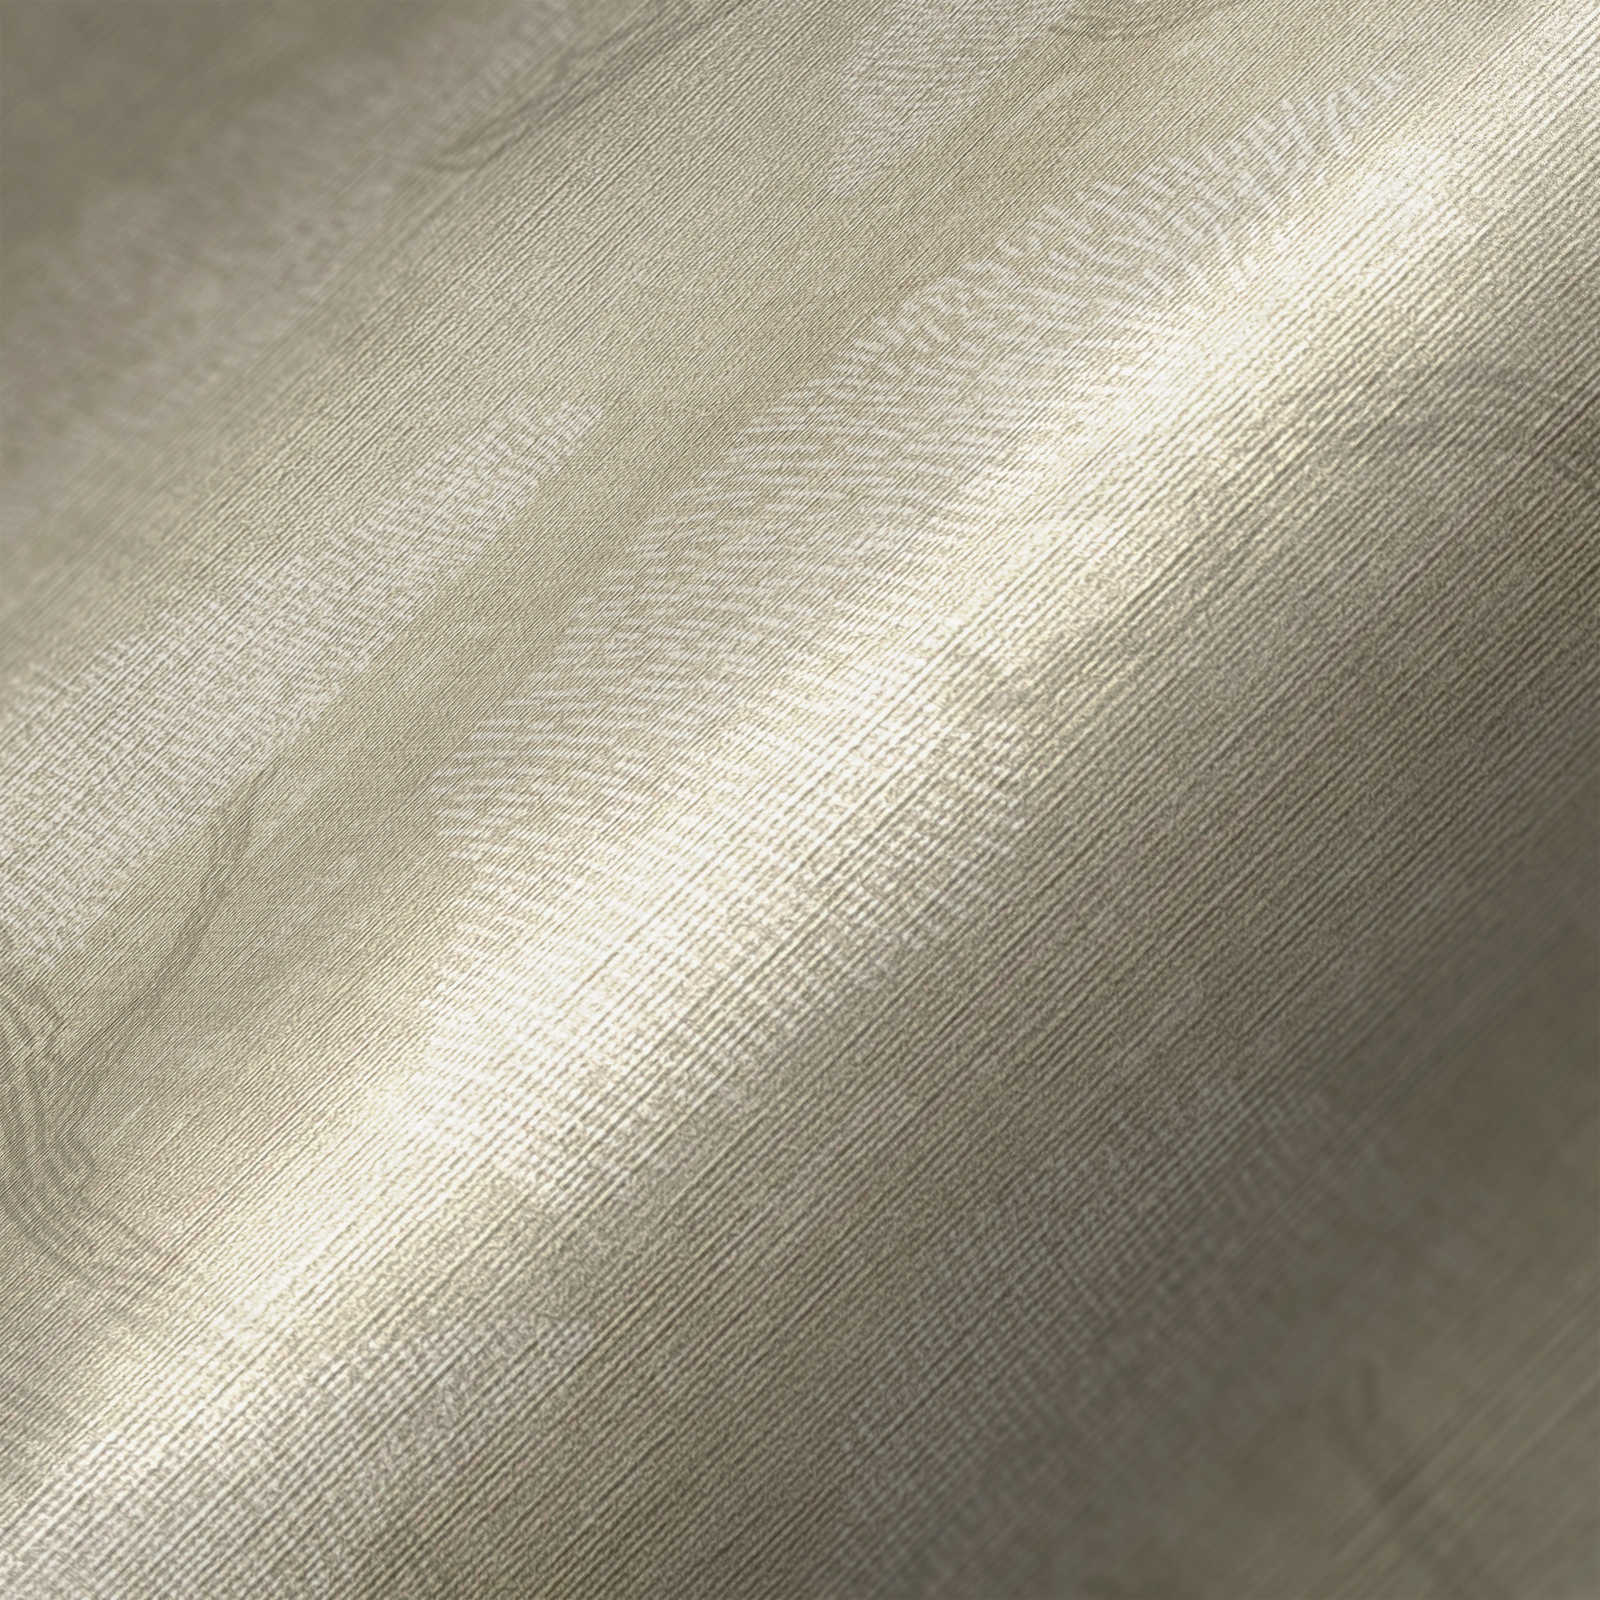             Vliesbehang dennenbos in retrolook - beige
        